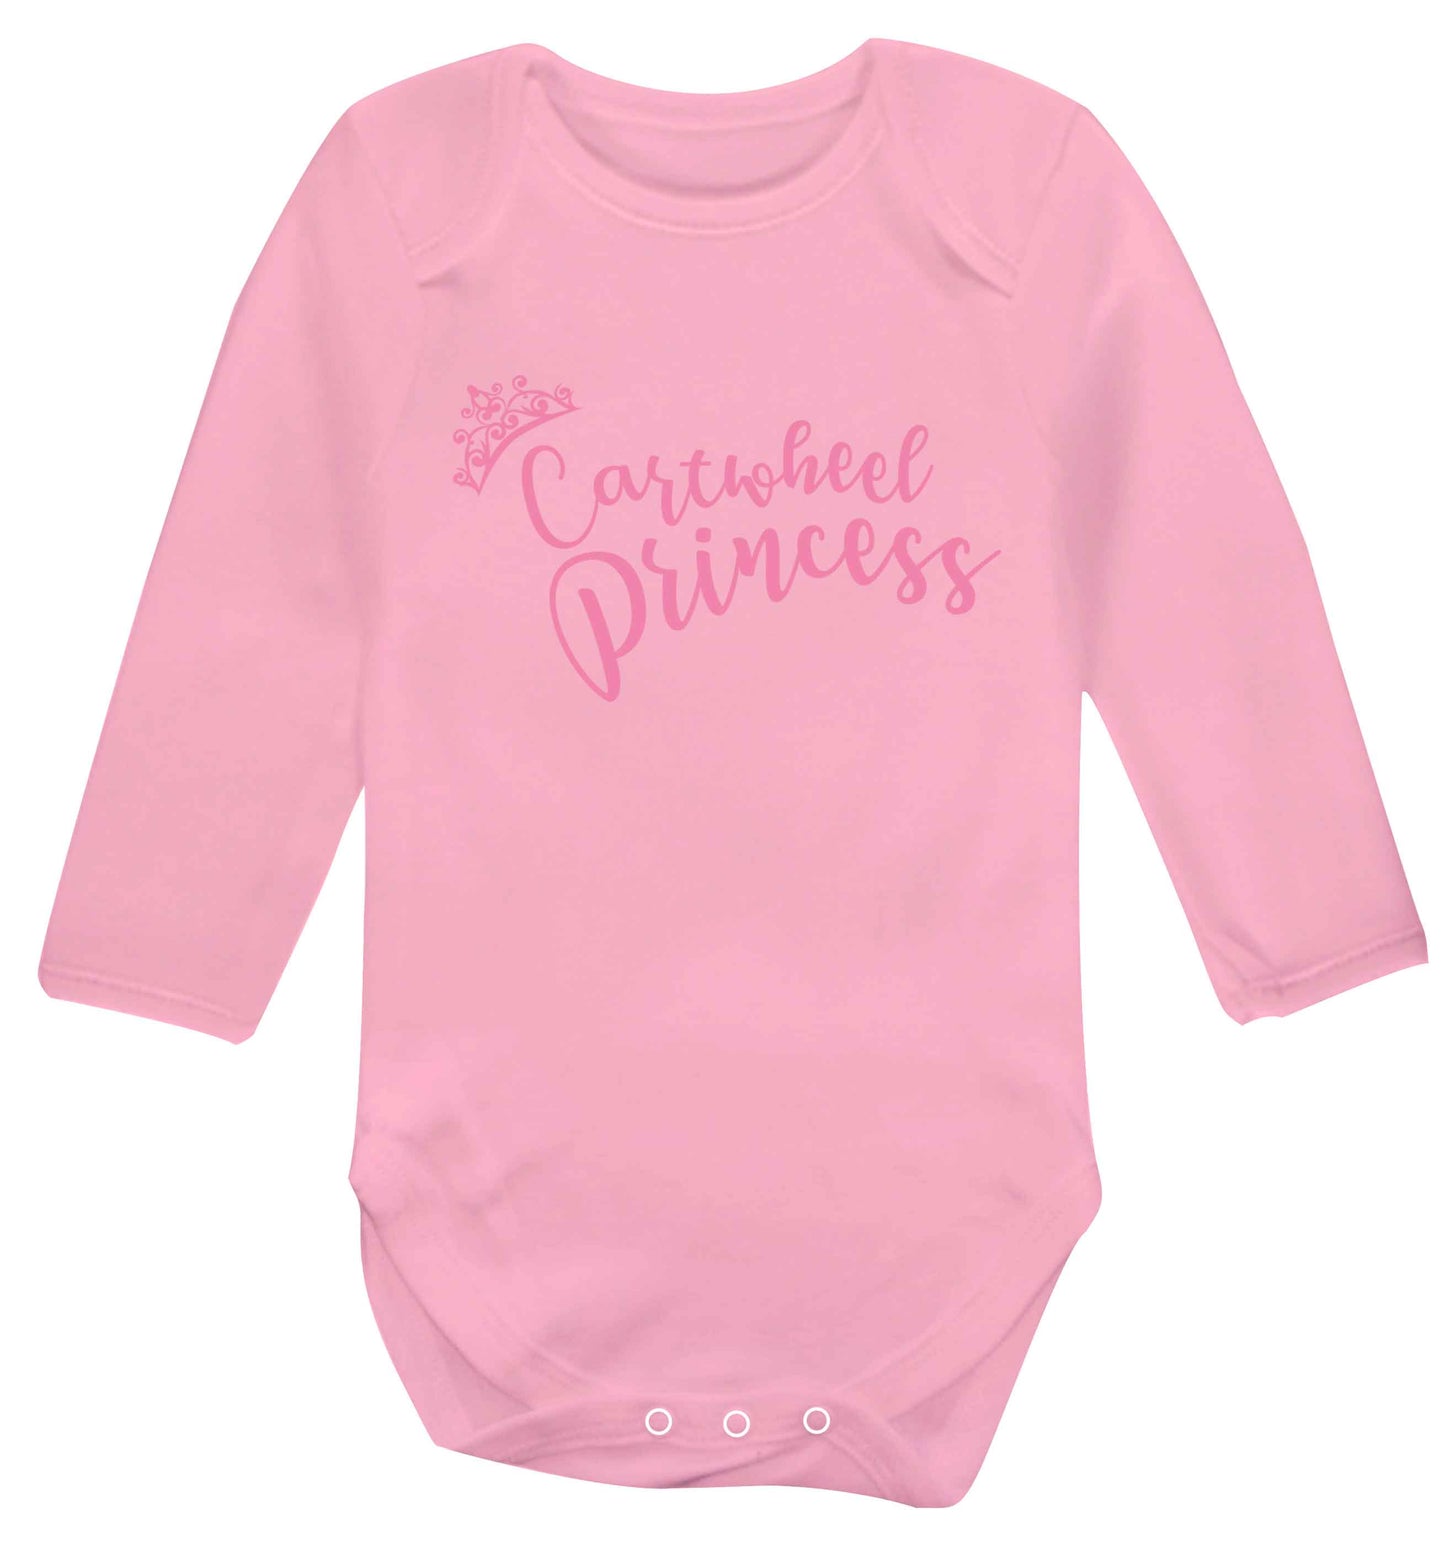 Cartwheel princess Baby Vest long sleeved pale pink 6-12 months